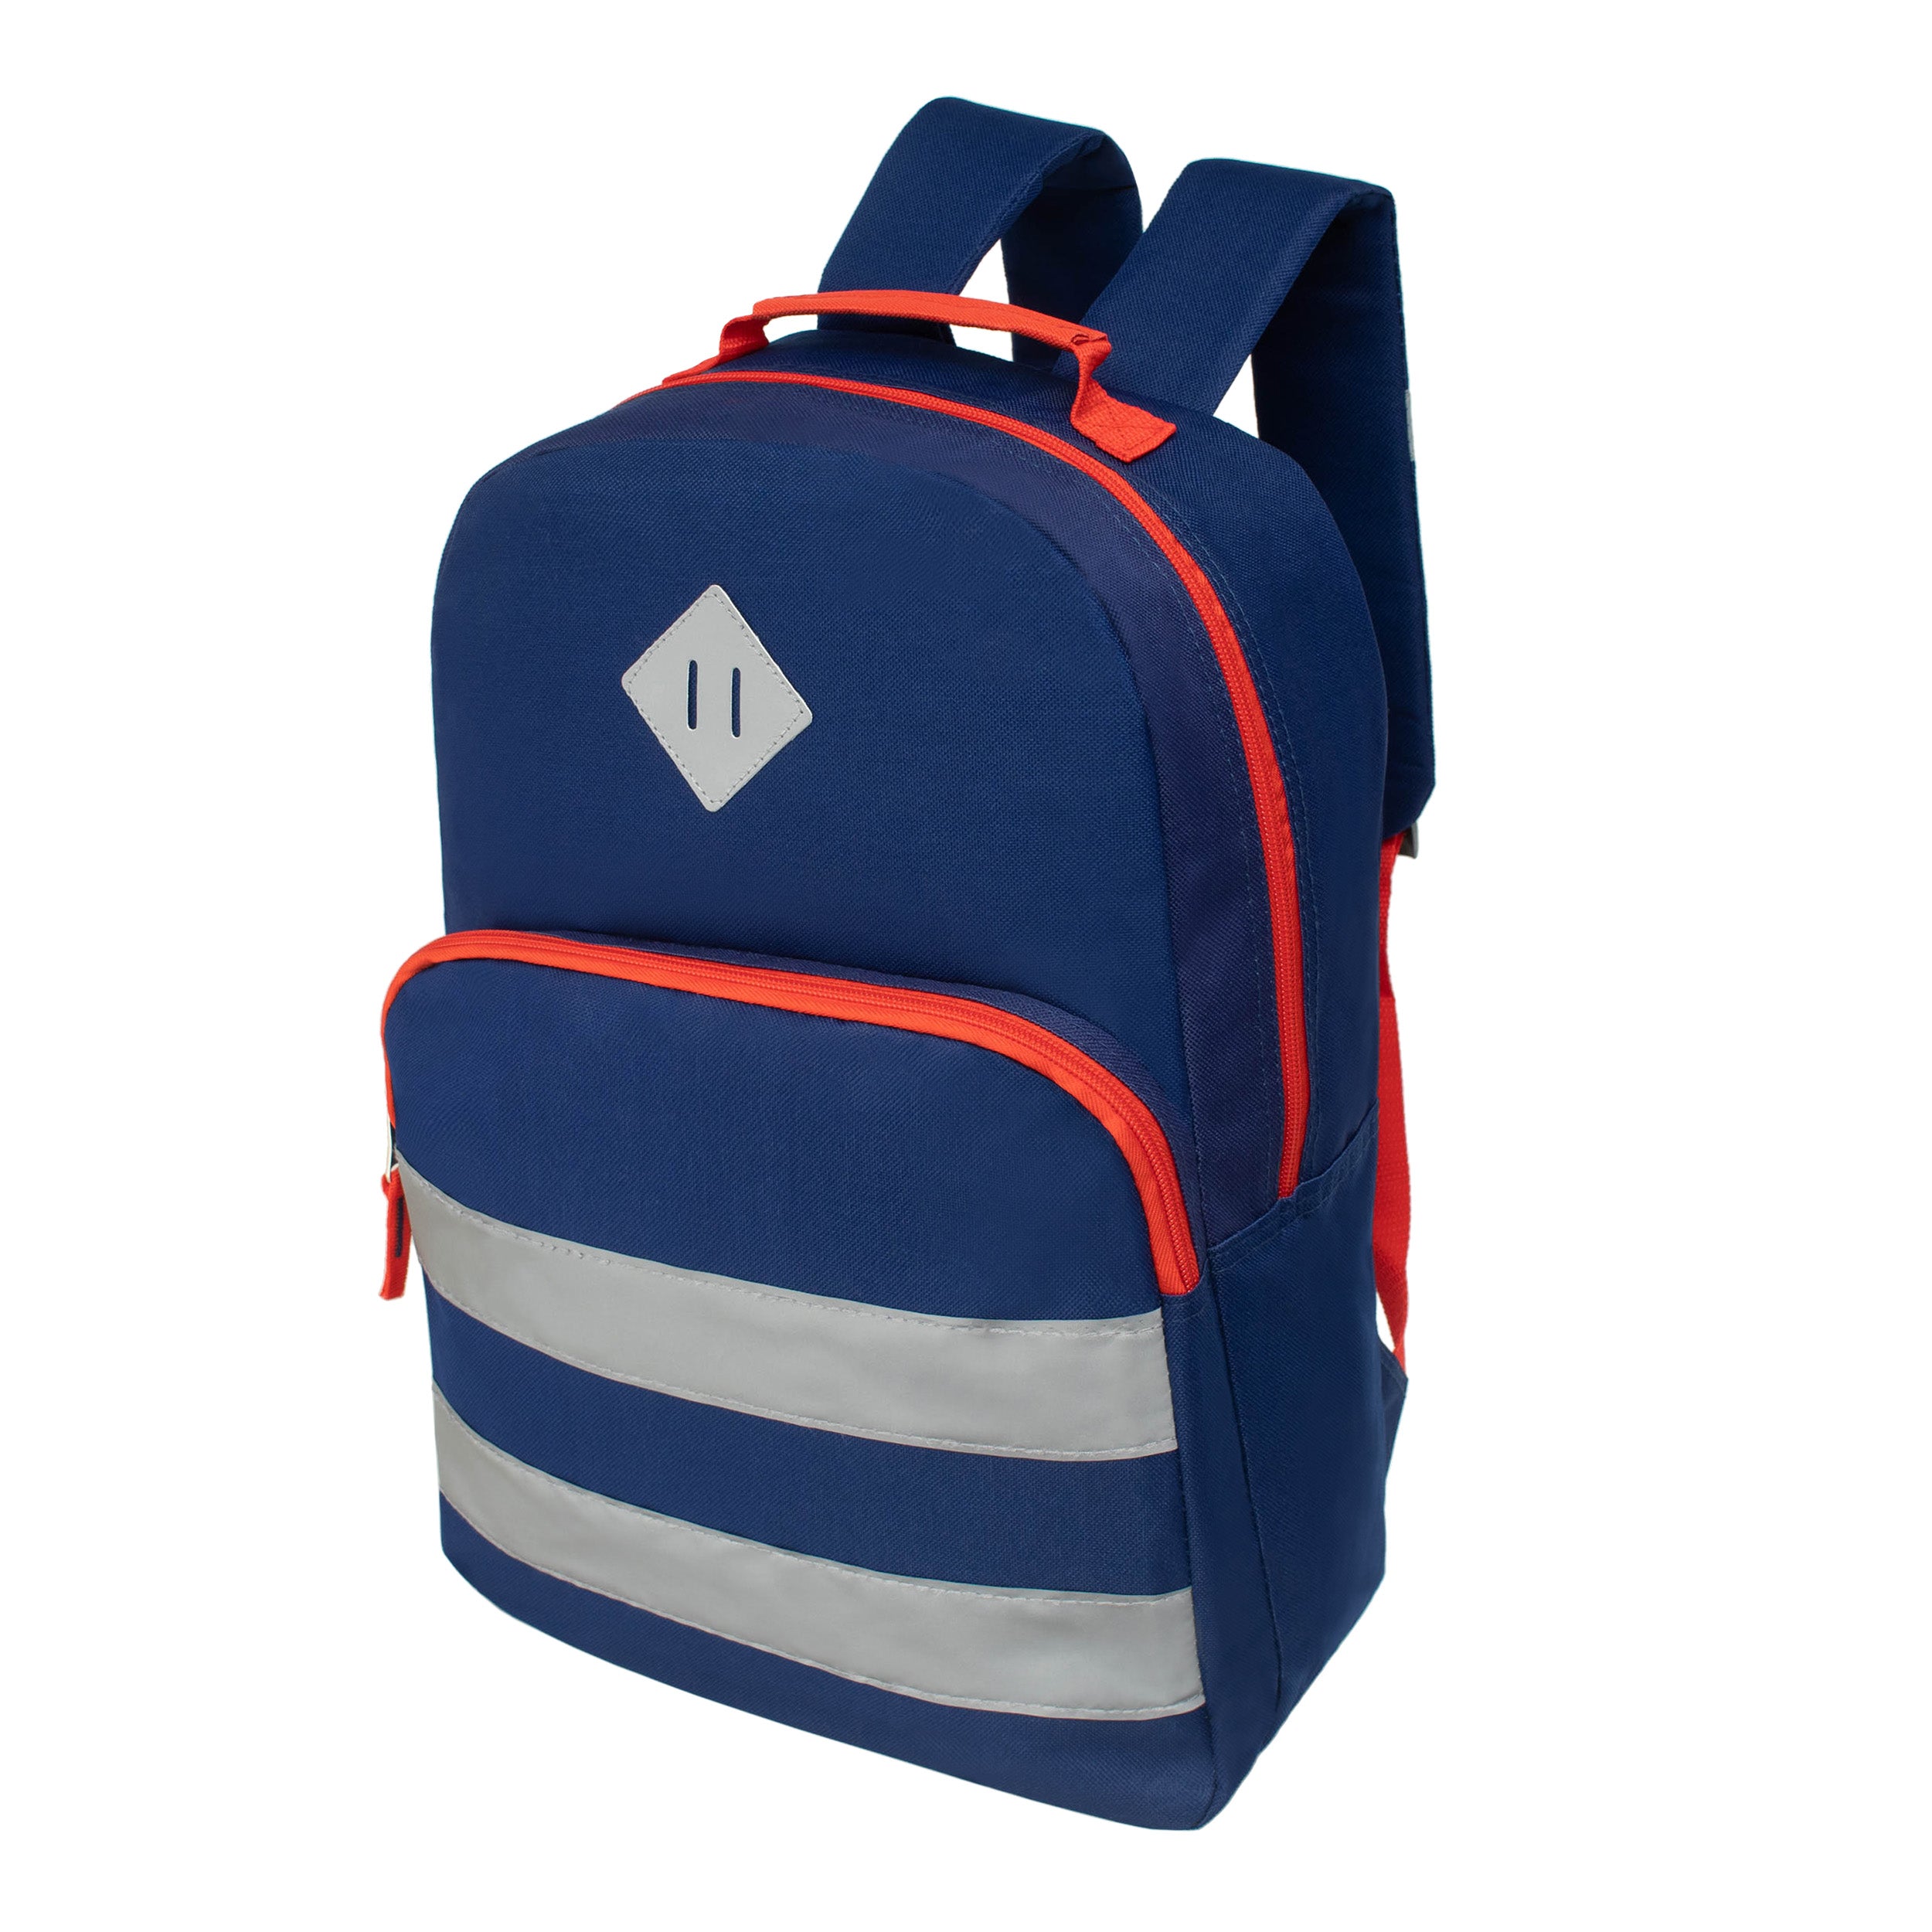 17 inch reflective wholesale school backpacks